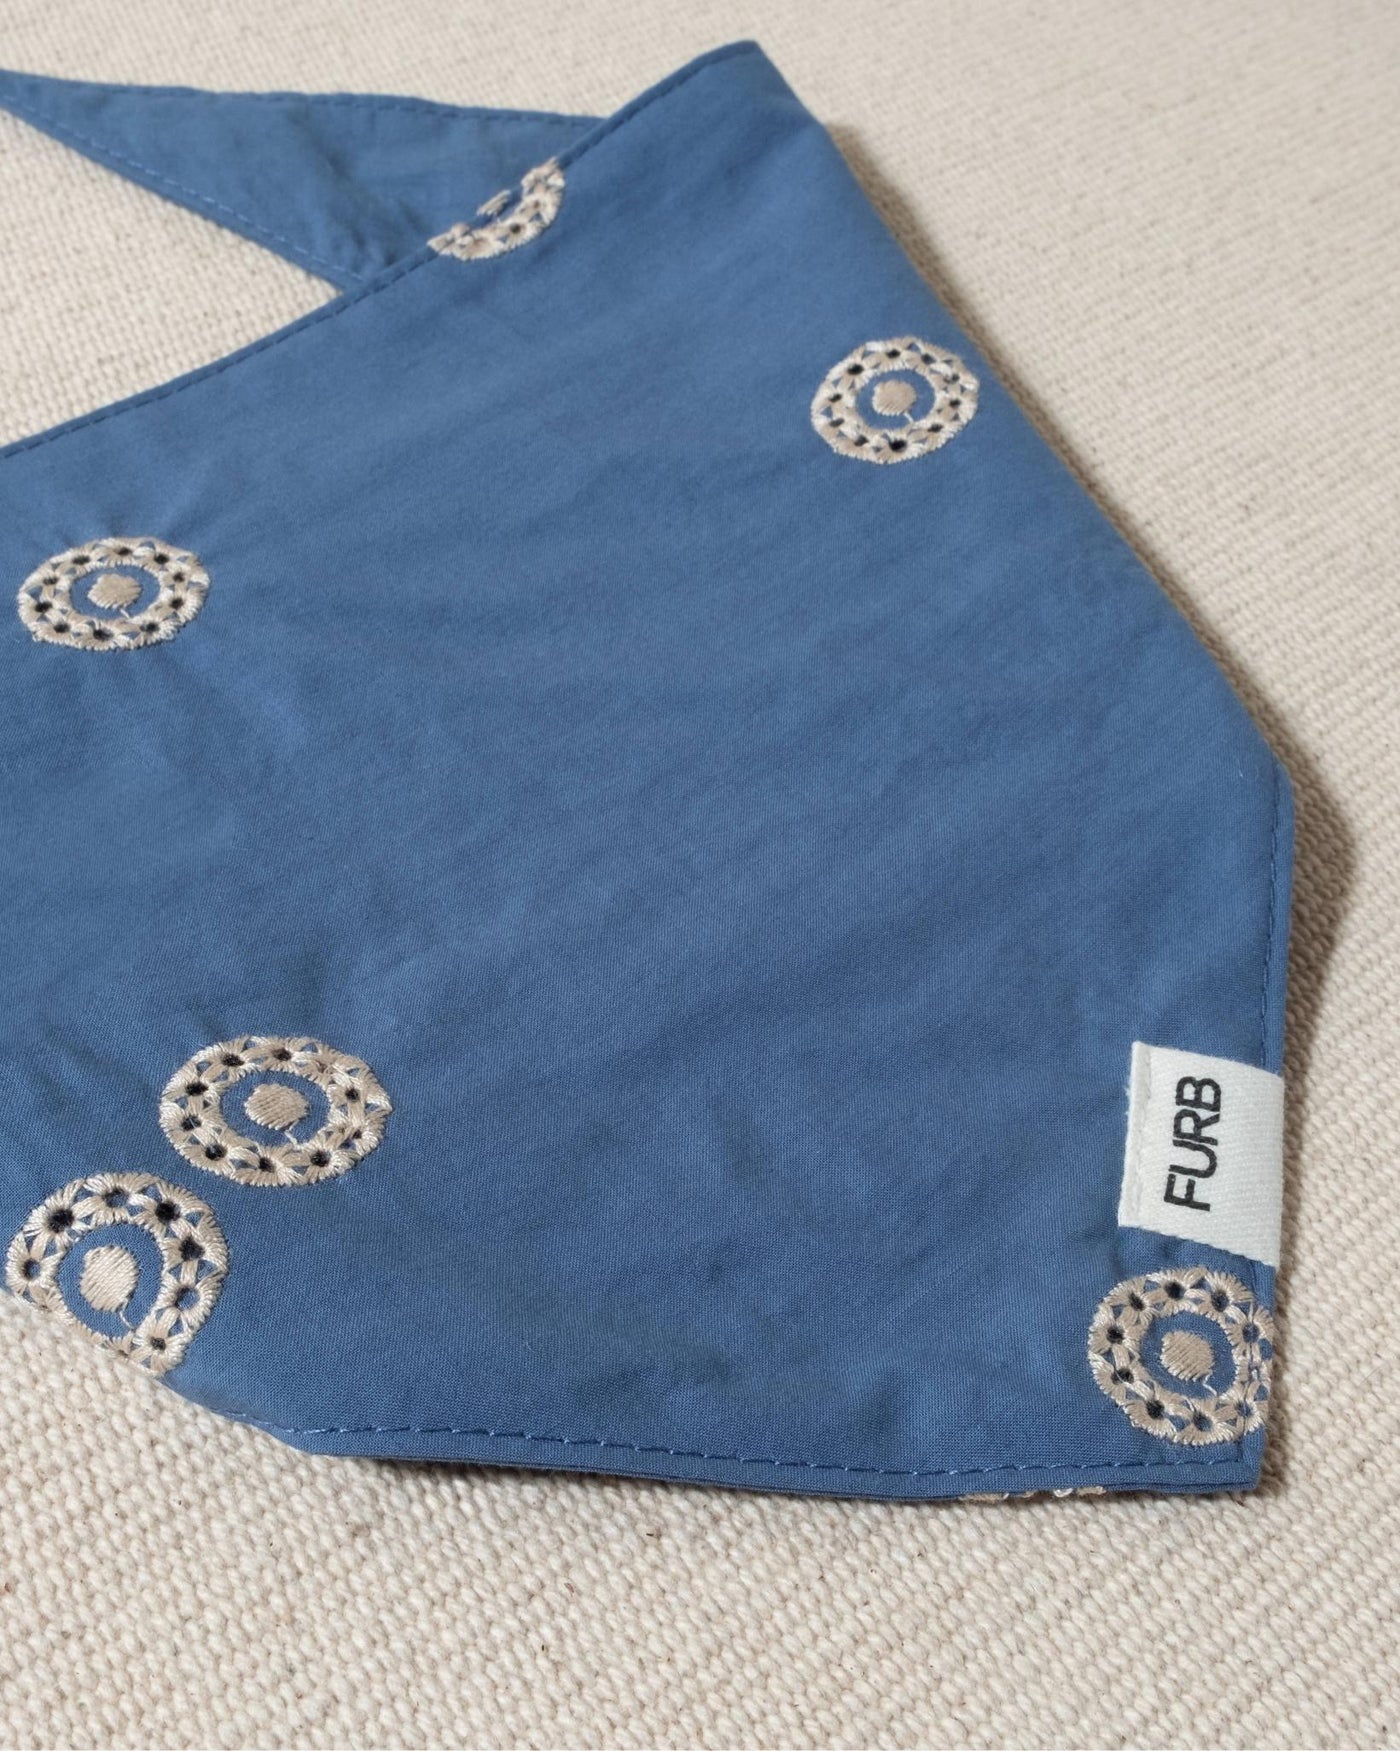 blue dog bandana with white embroidery and tasteful furb logo